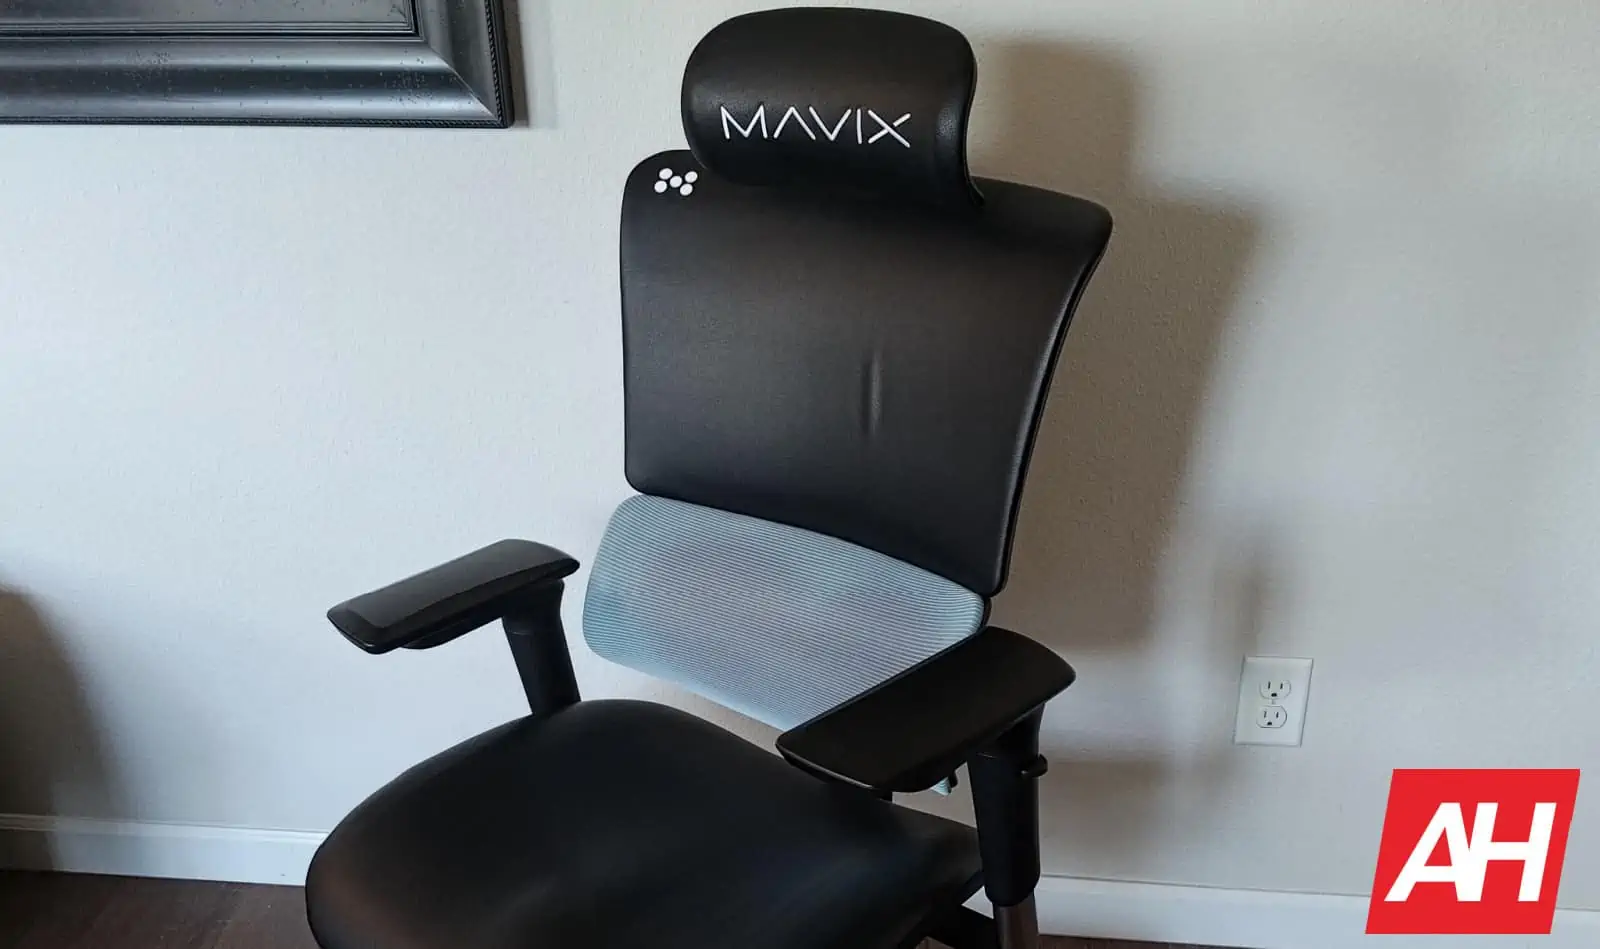 Mavix M9 Gaming Chair Review 1